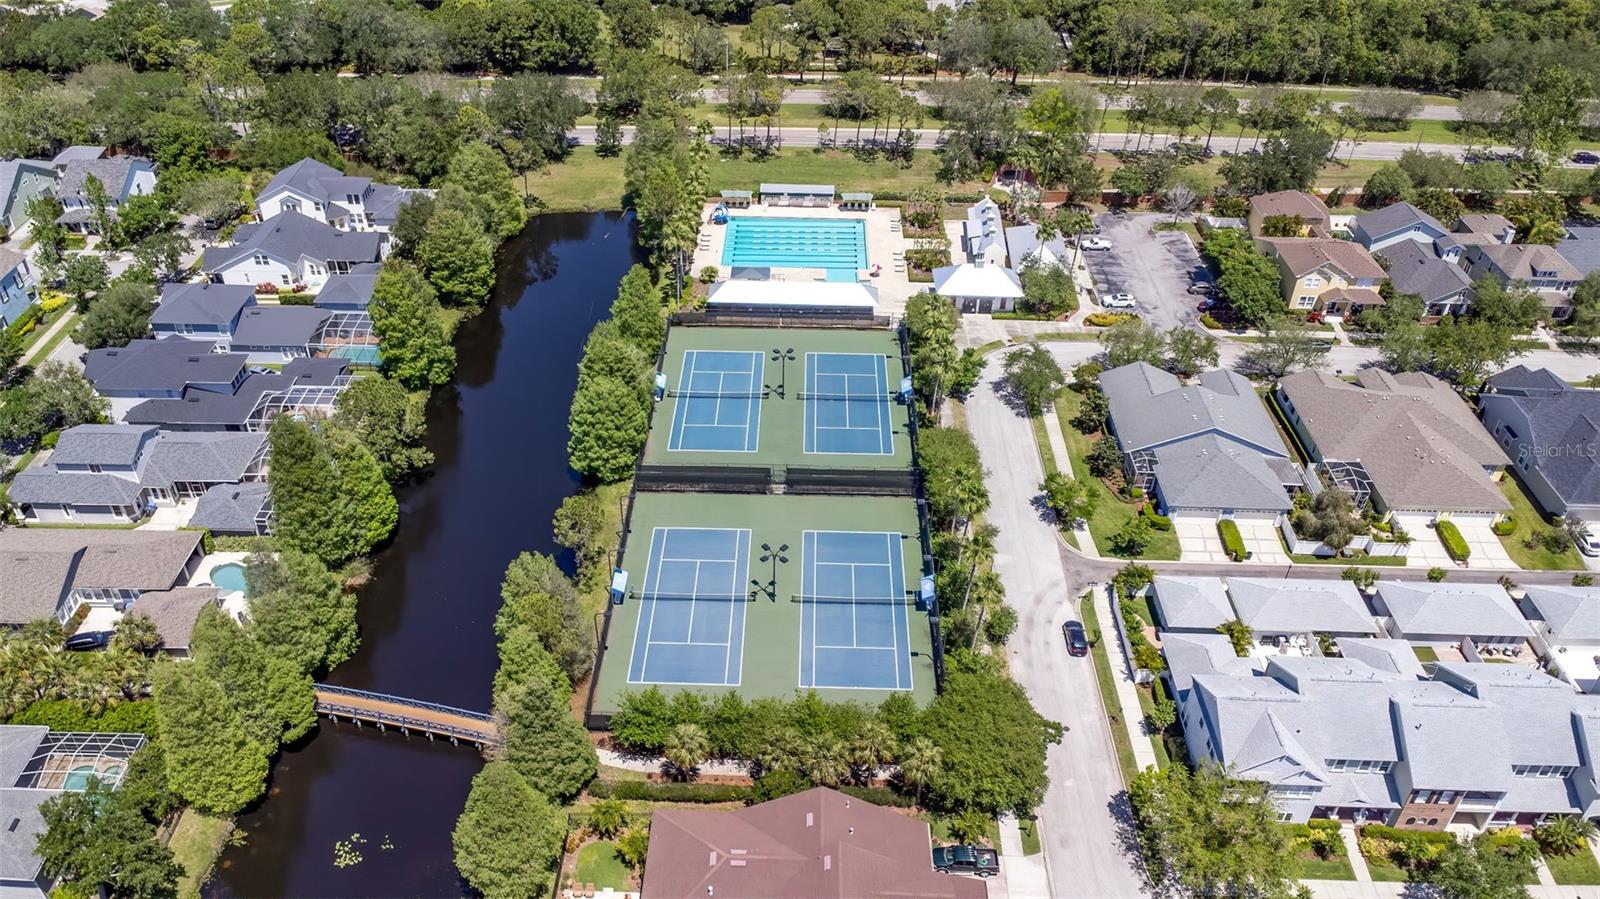 Community Pool & Tennis